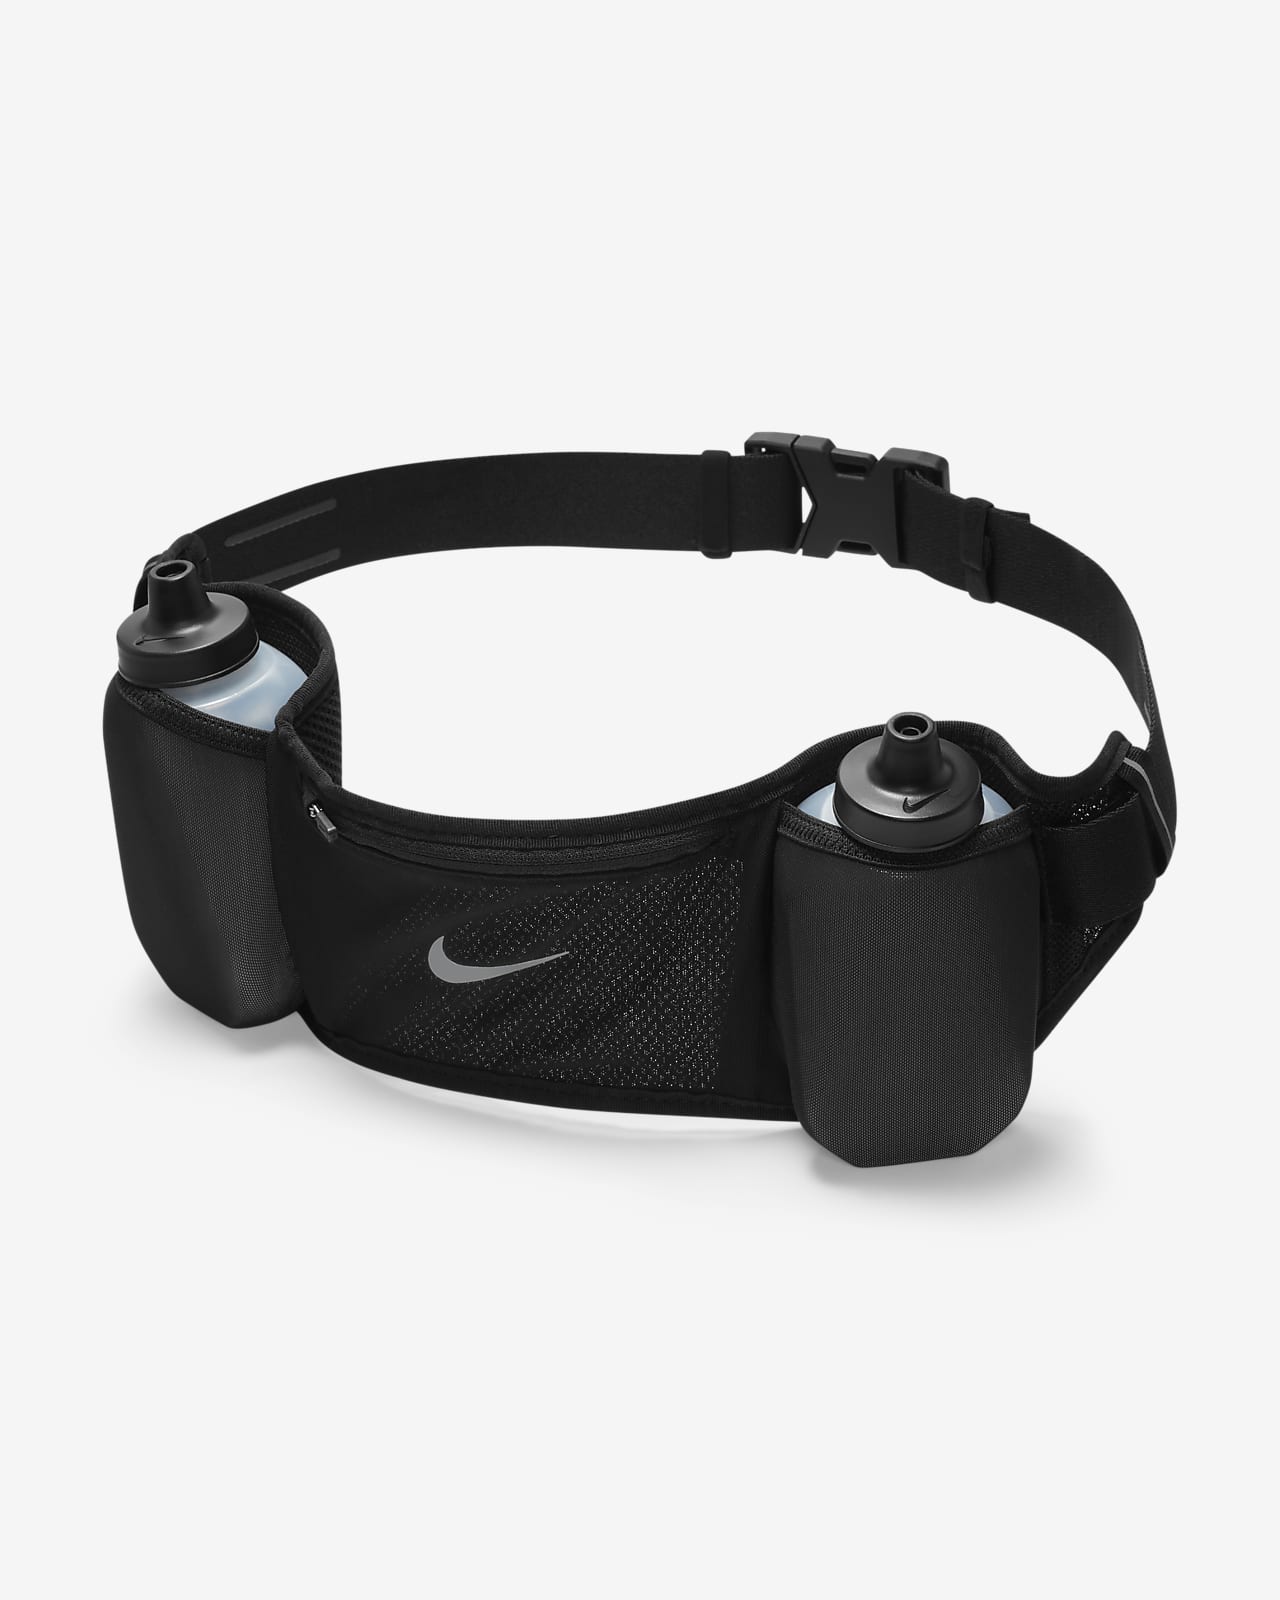 Nike 710ml (approx.) Flex Stride Double Running Hydration Belt